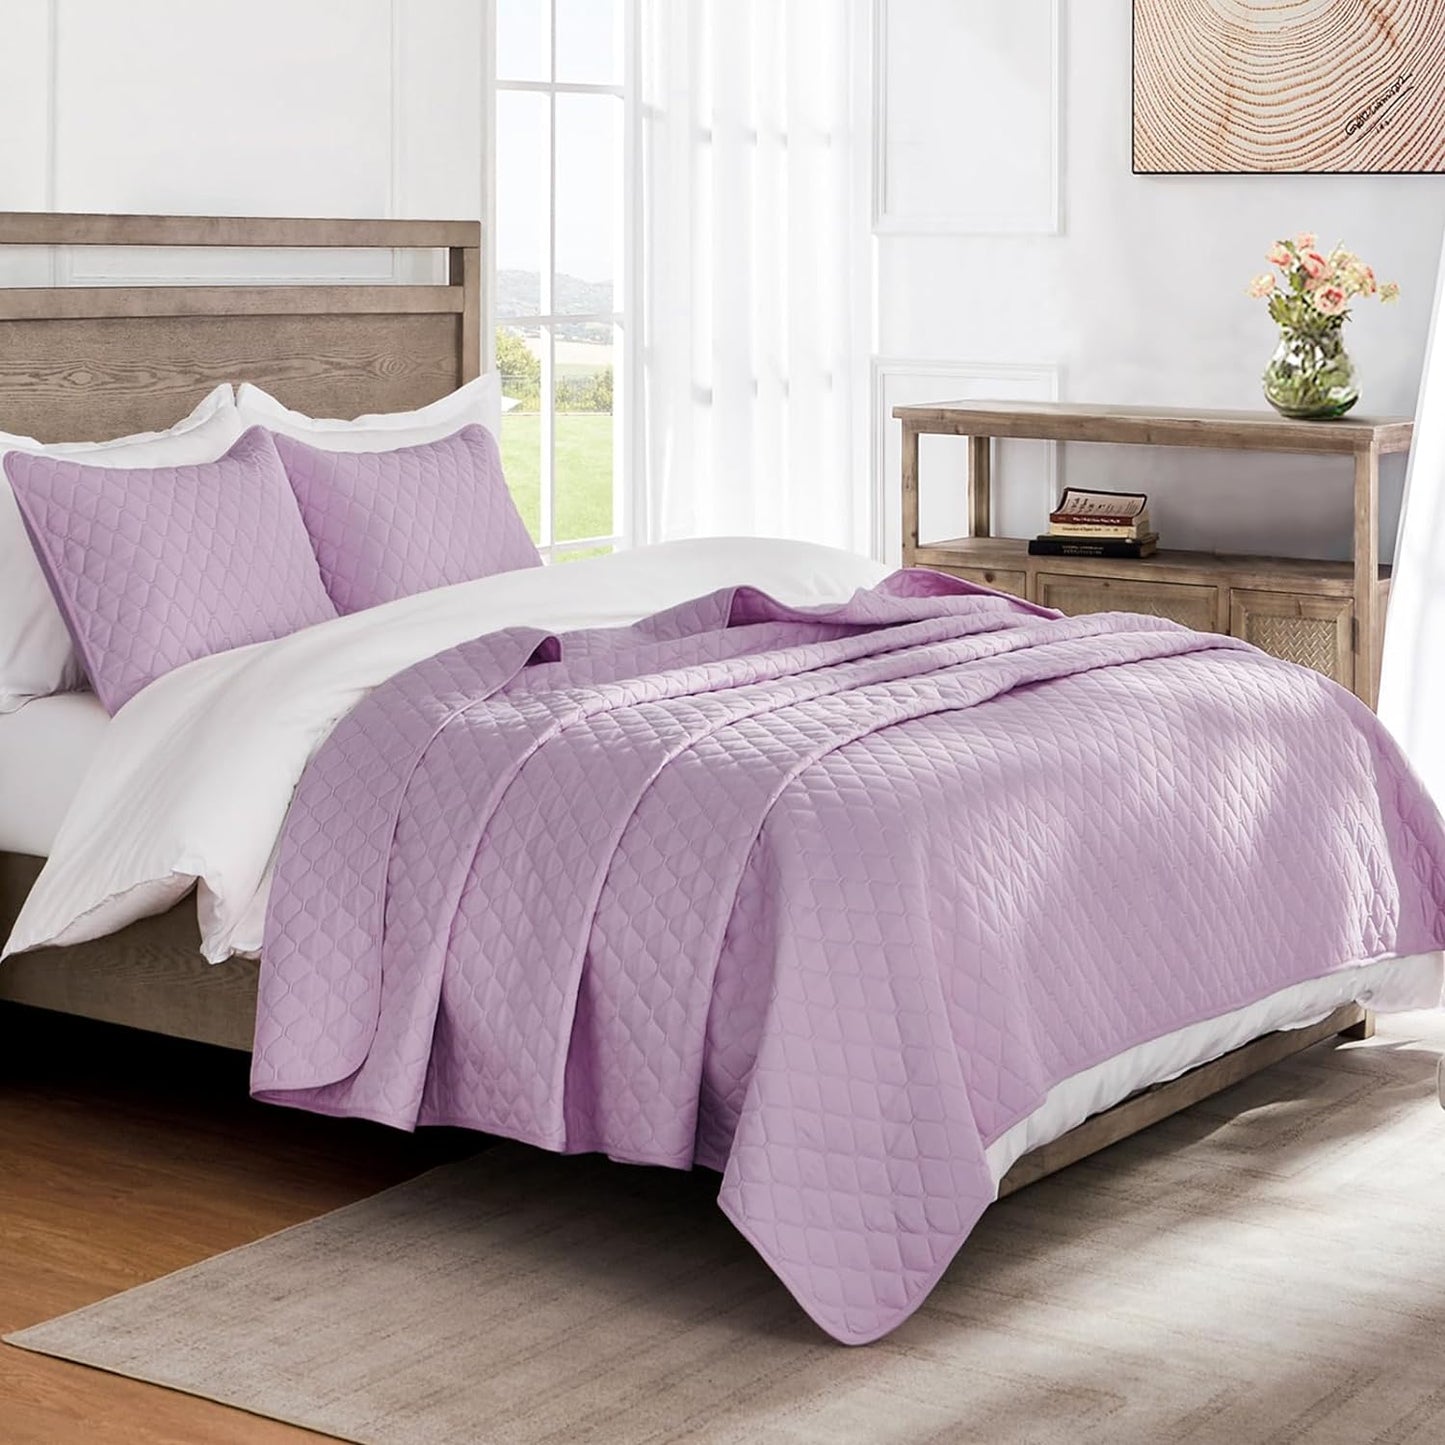 Solid Light Purple 3 Piece Lightweight Bedding Quilt Set